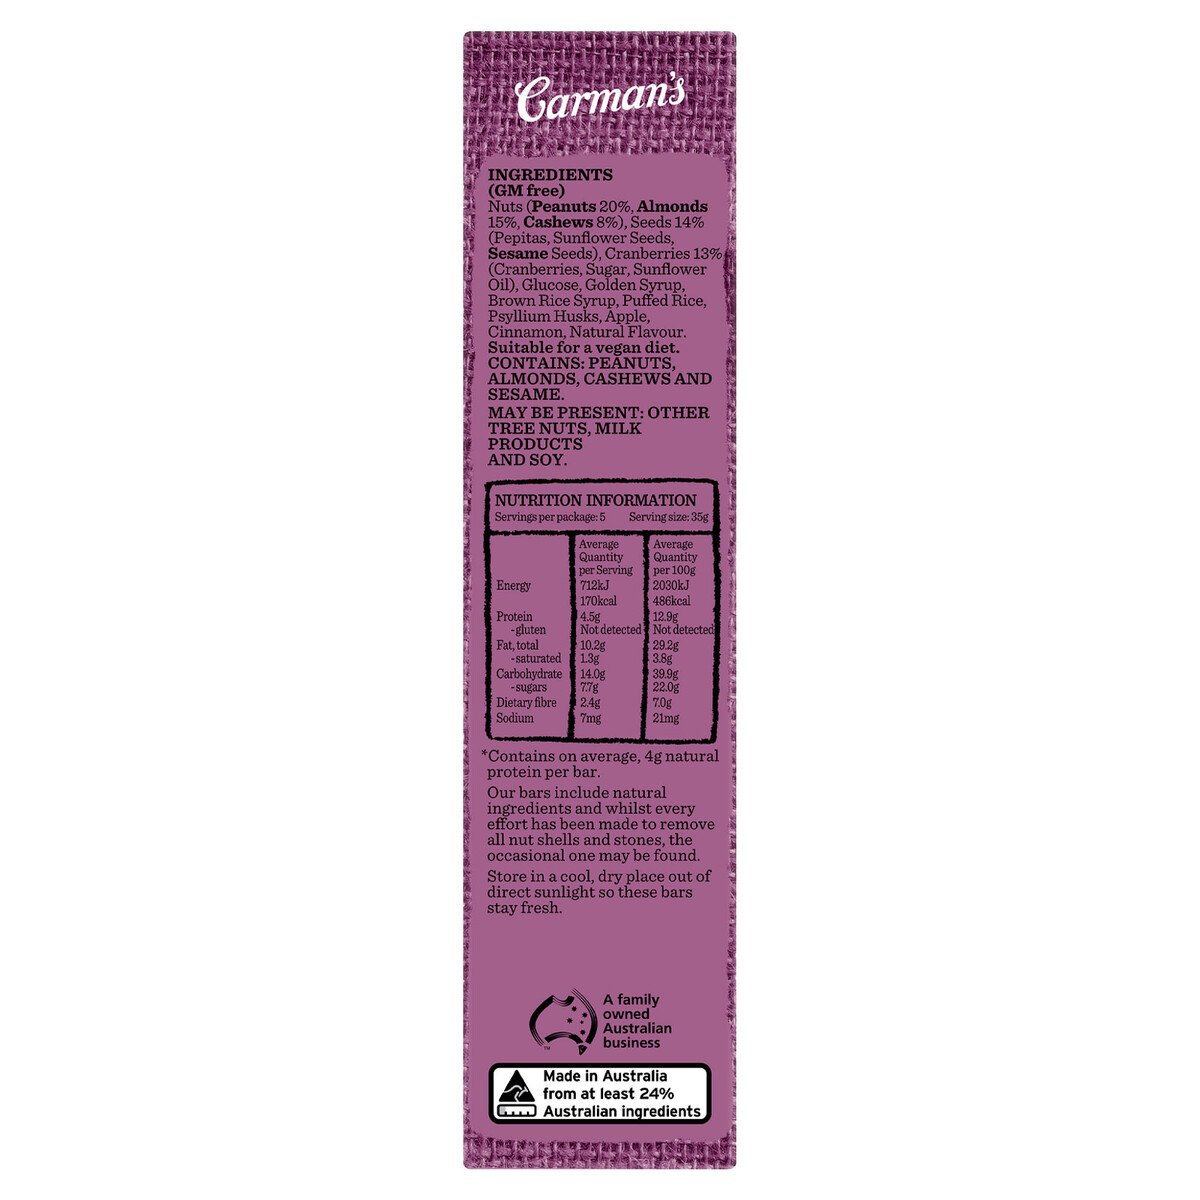 Carmans Almond Cashew & Cranberry & Nut Bar 35 g